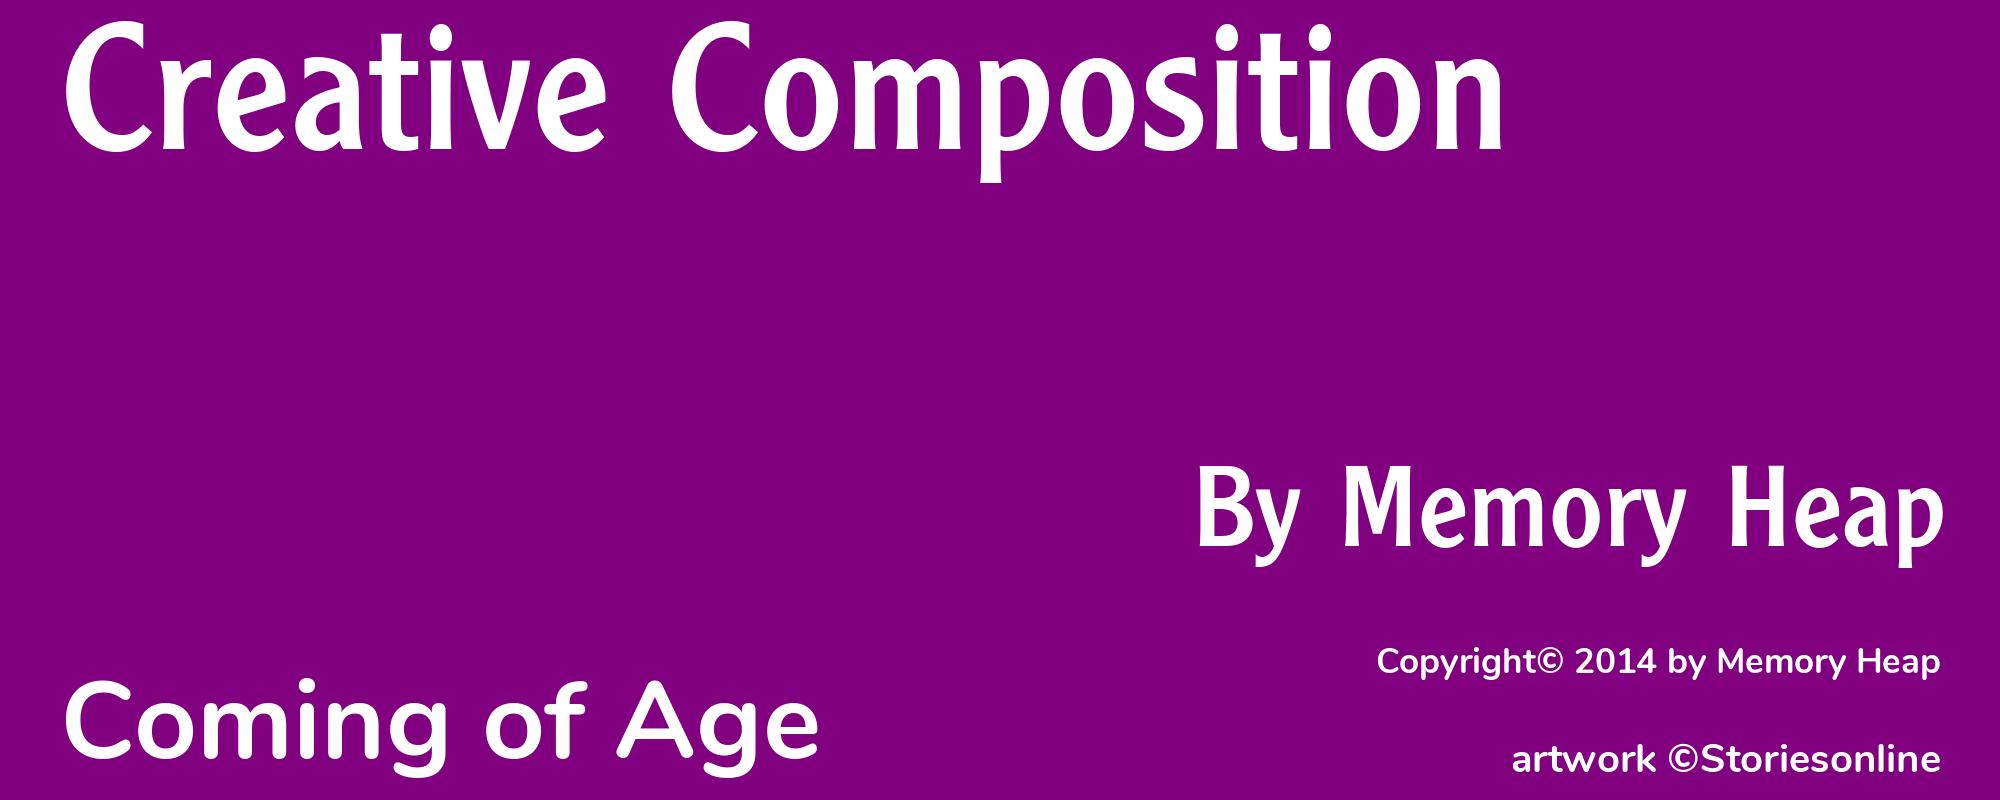 Creative Composition - Cover